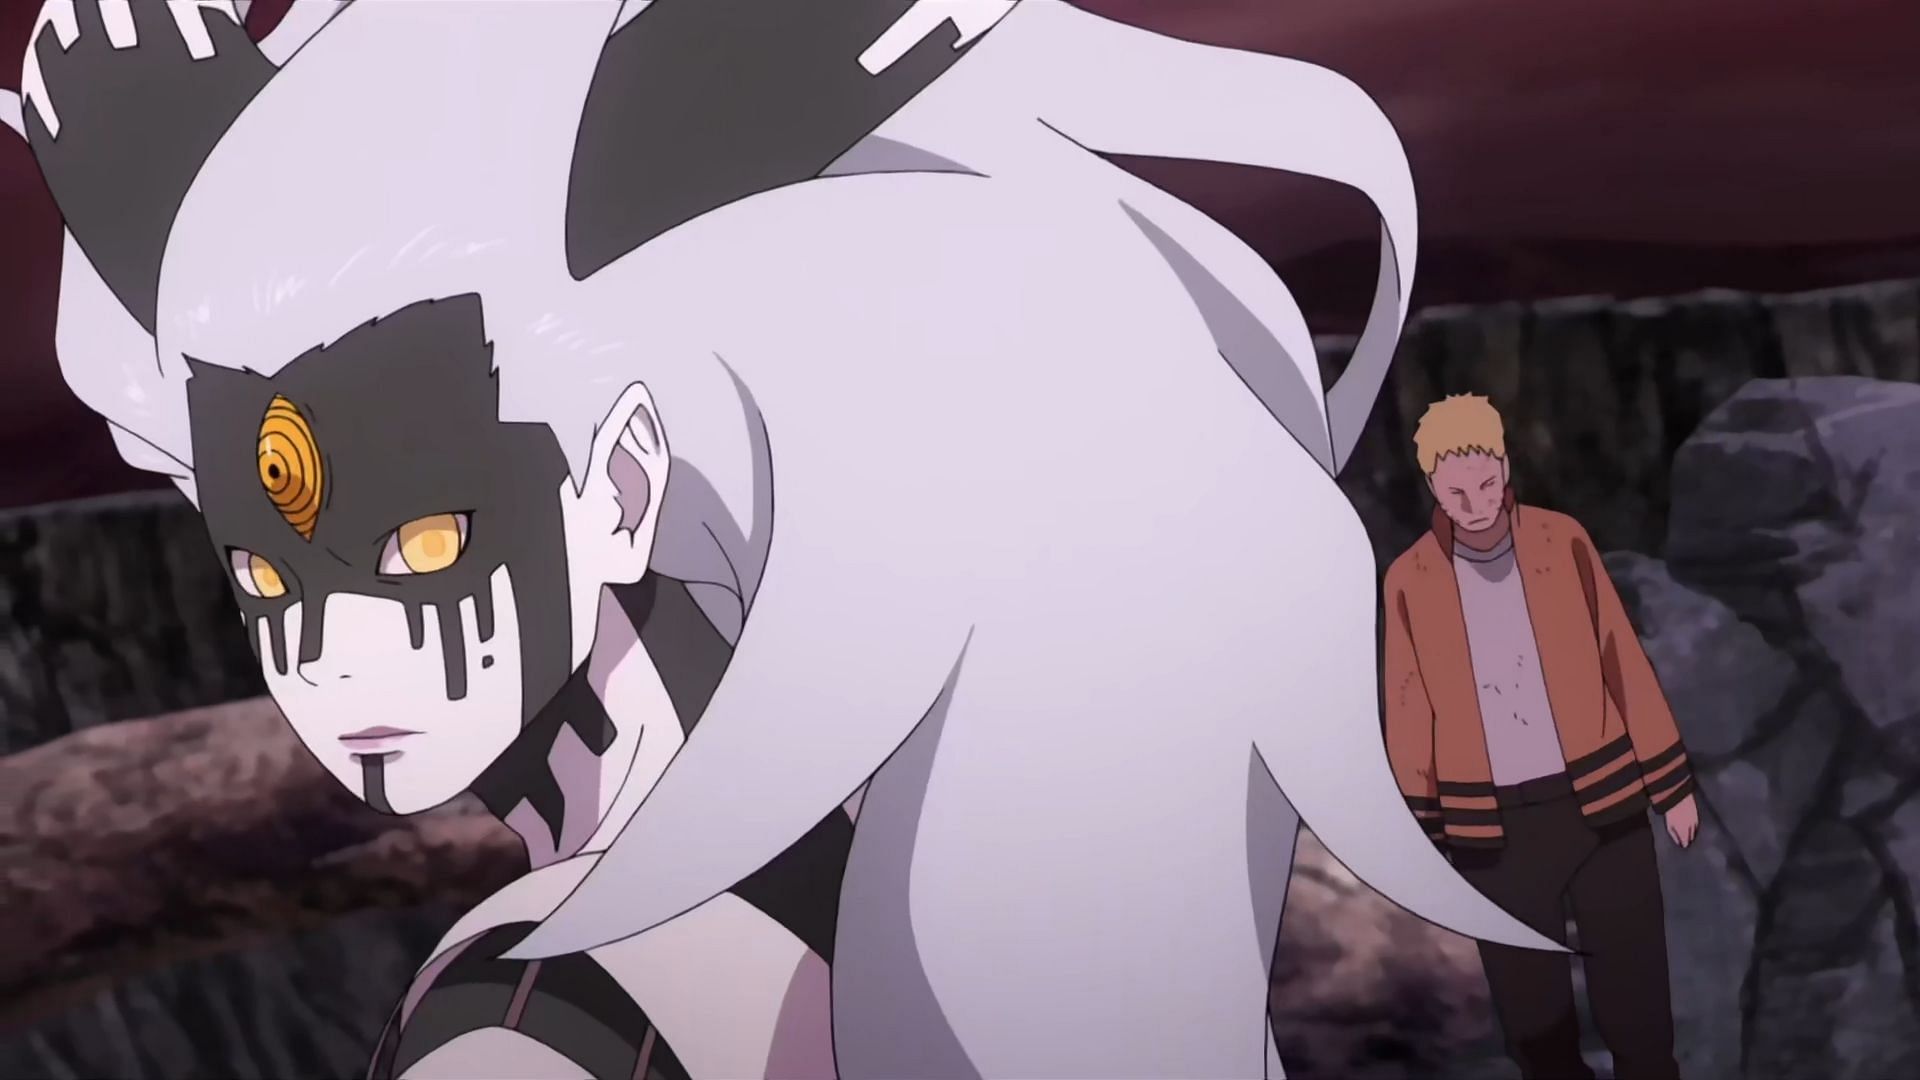 Momoshiki before fighting Naruto and Sasuke (Image via Studio Pierrot)